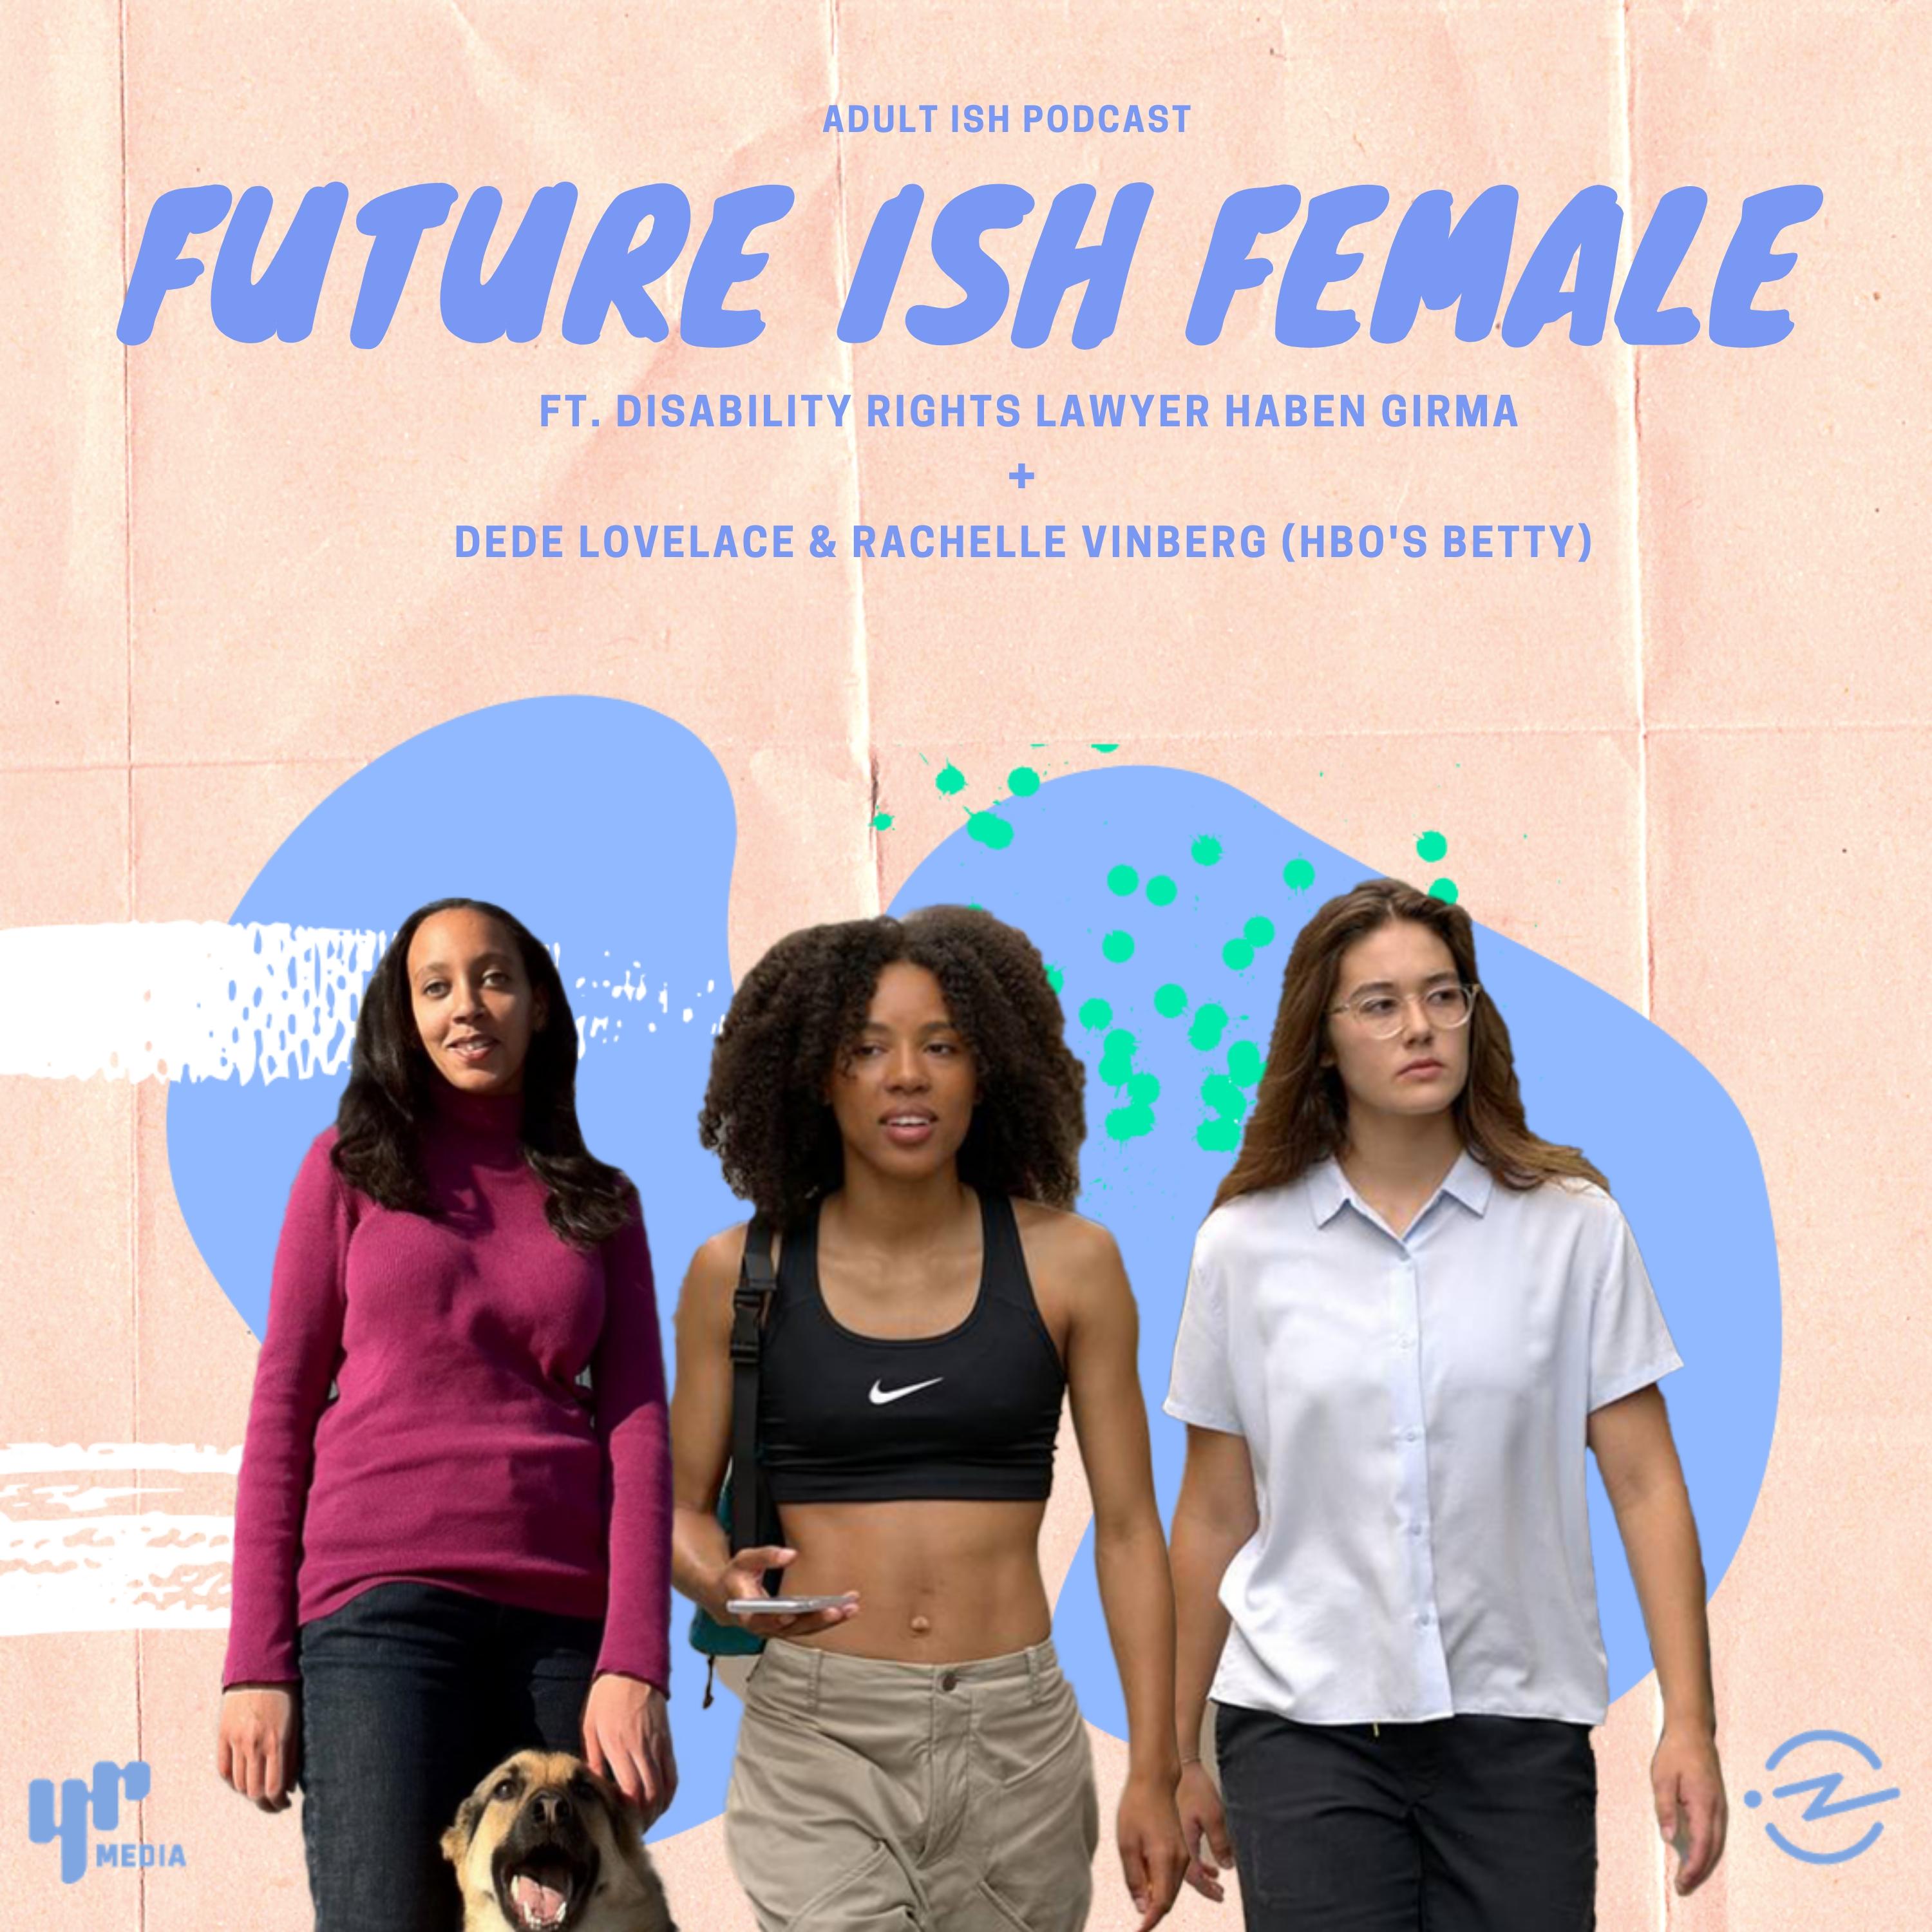 Thumbnail for "Future ISH Female (ft. Activist Haben Girma + HBO's "Betty")".